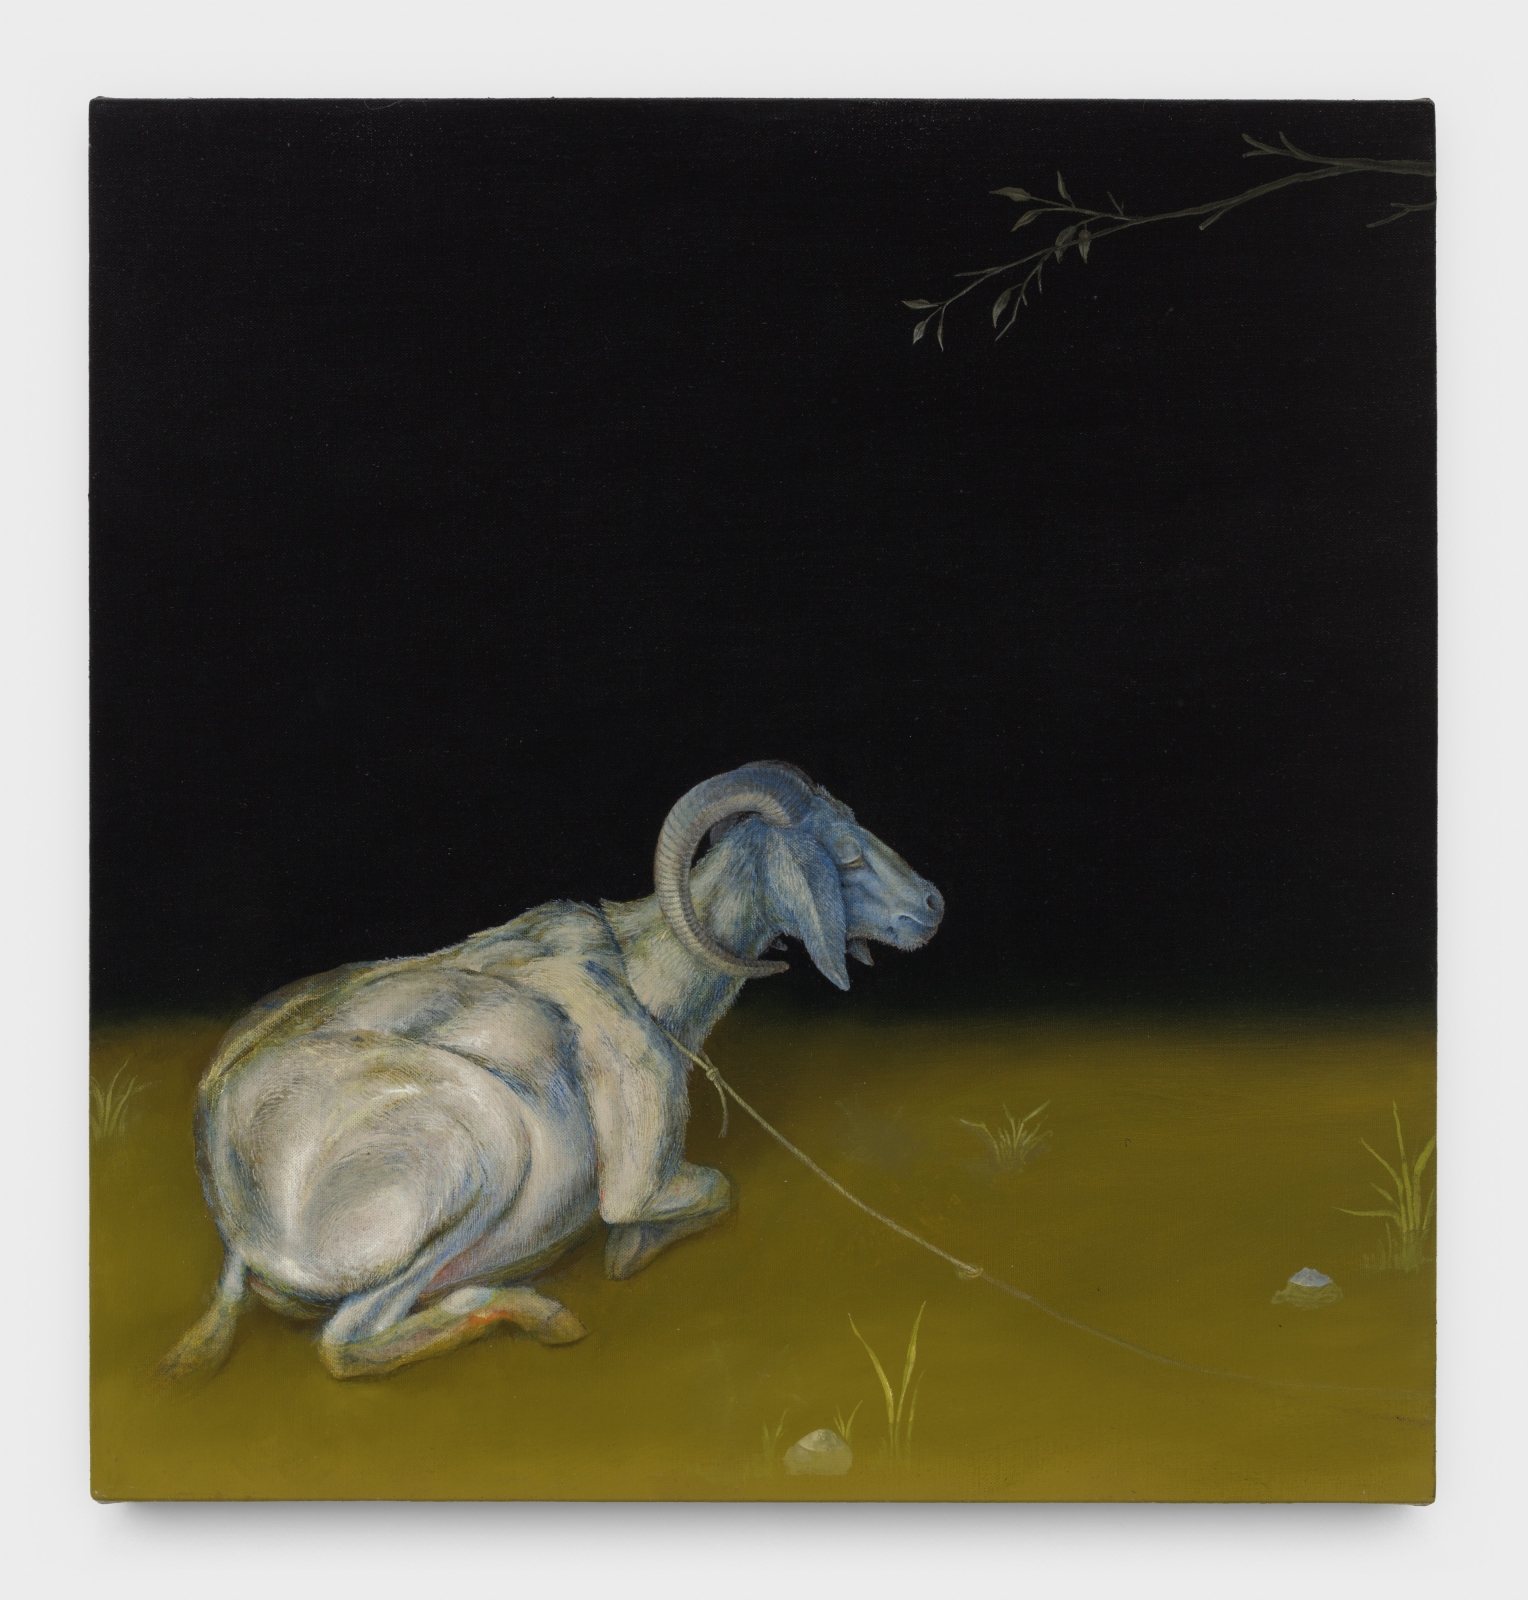 Tom Knechtel
A goat for Bob Baruch, 2018
oil on linen
23 1/2 x 22 1/2 ins.
59.7 x 57.1 cm